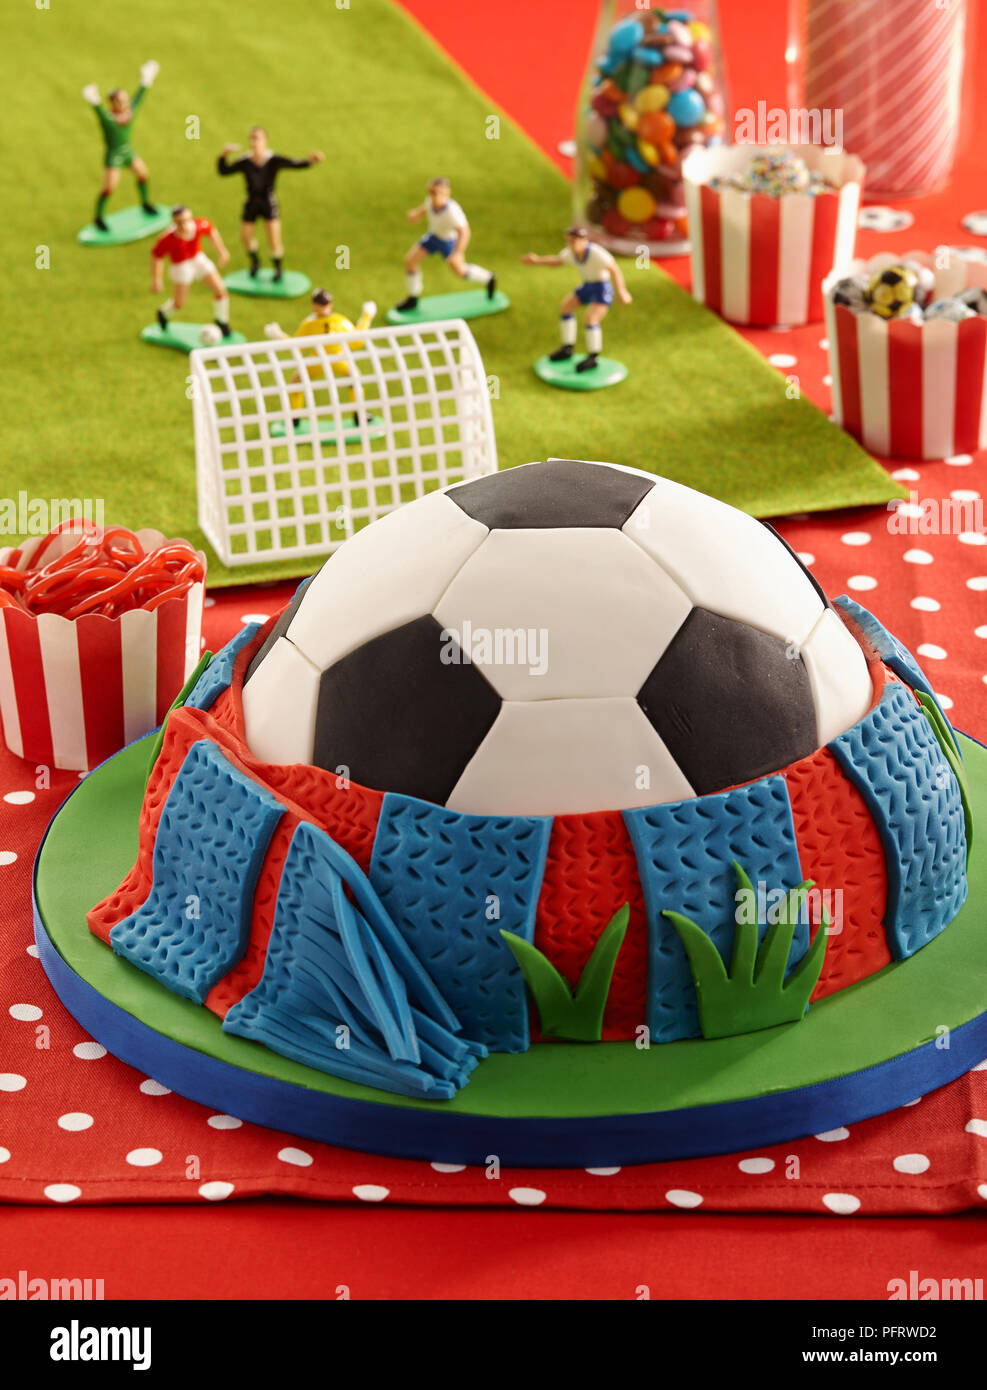 Football cake Stock Photo